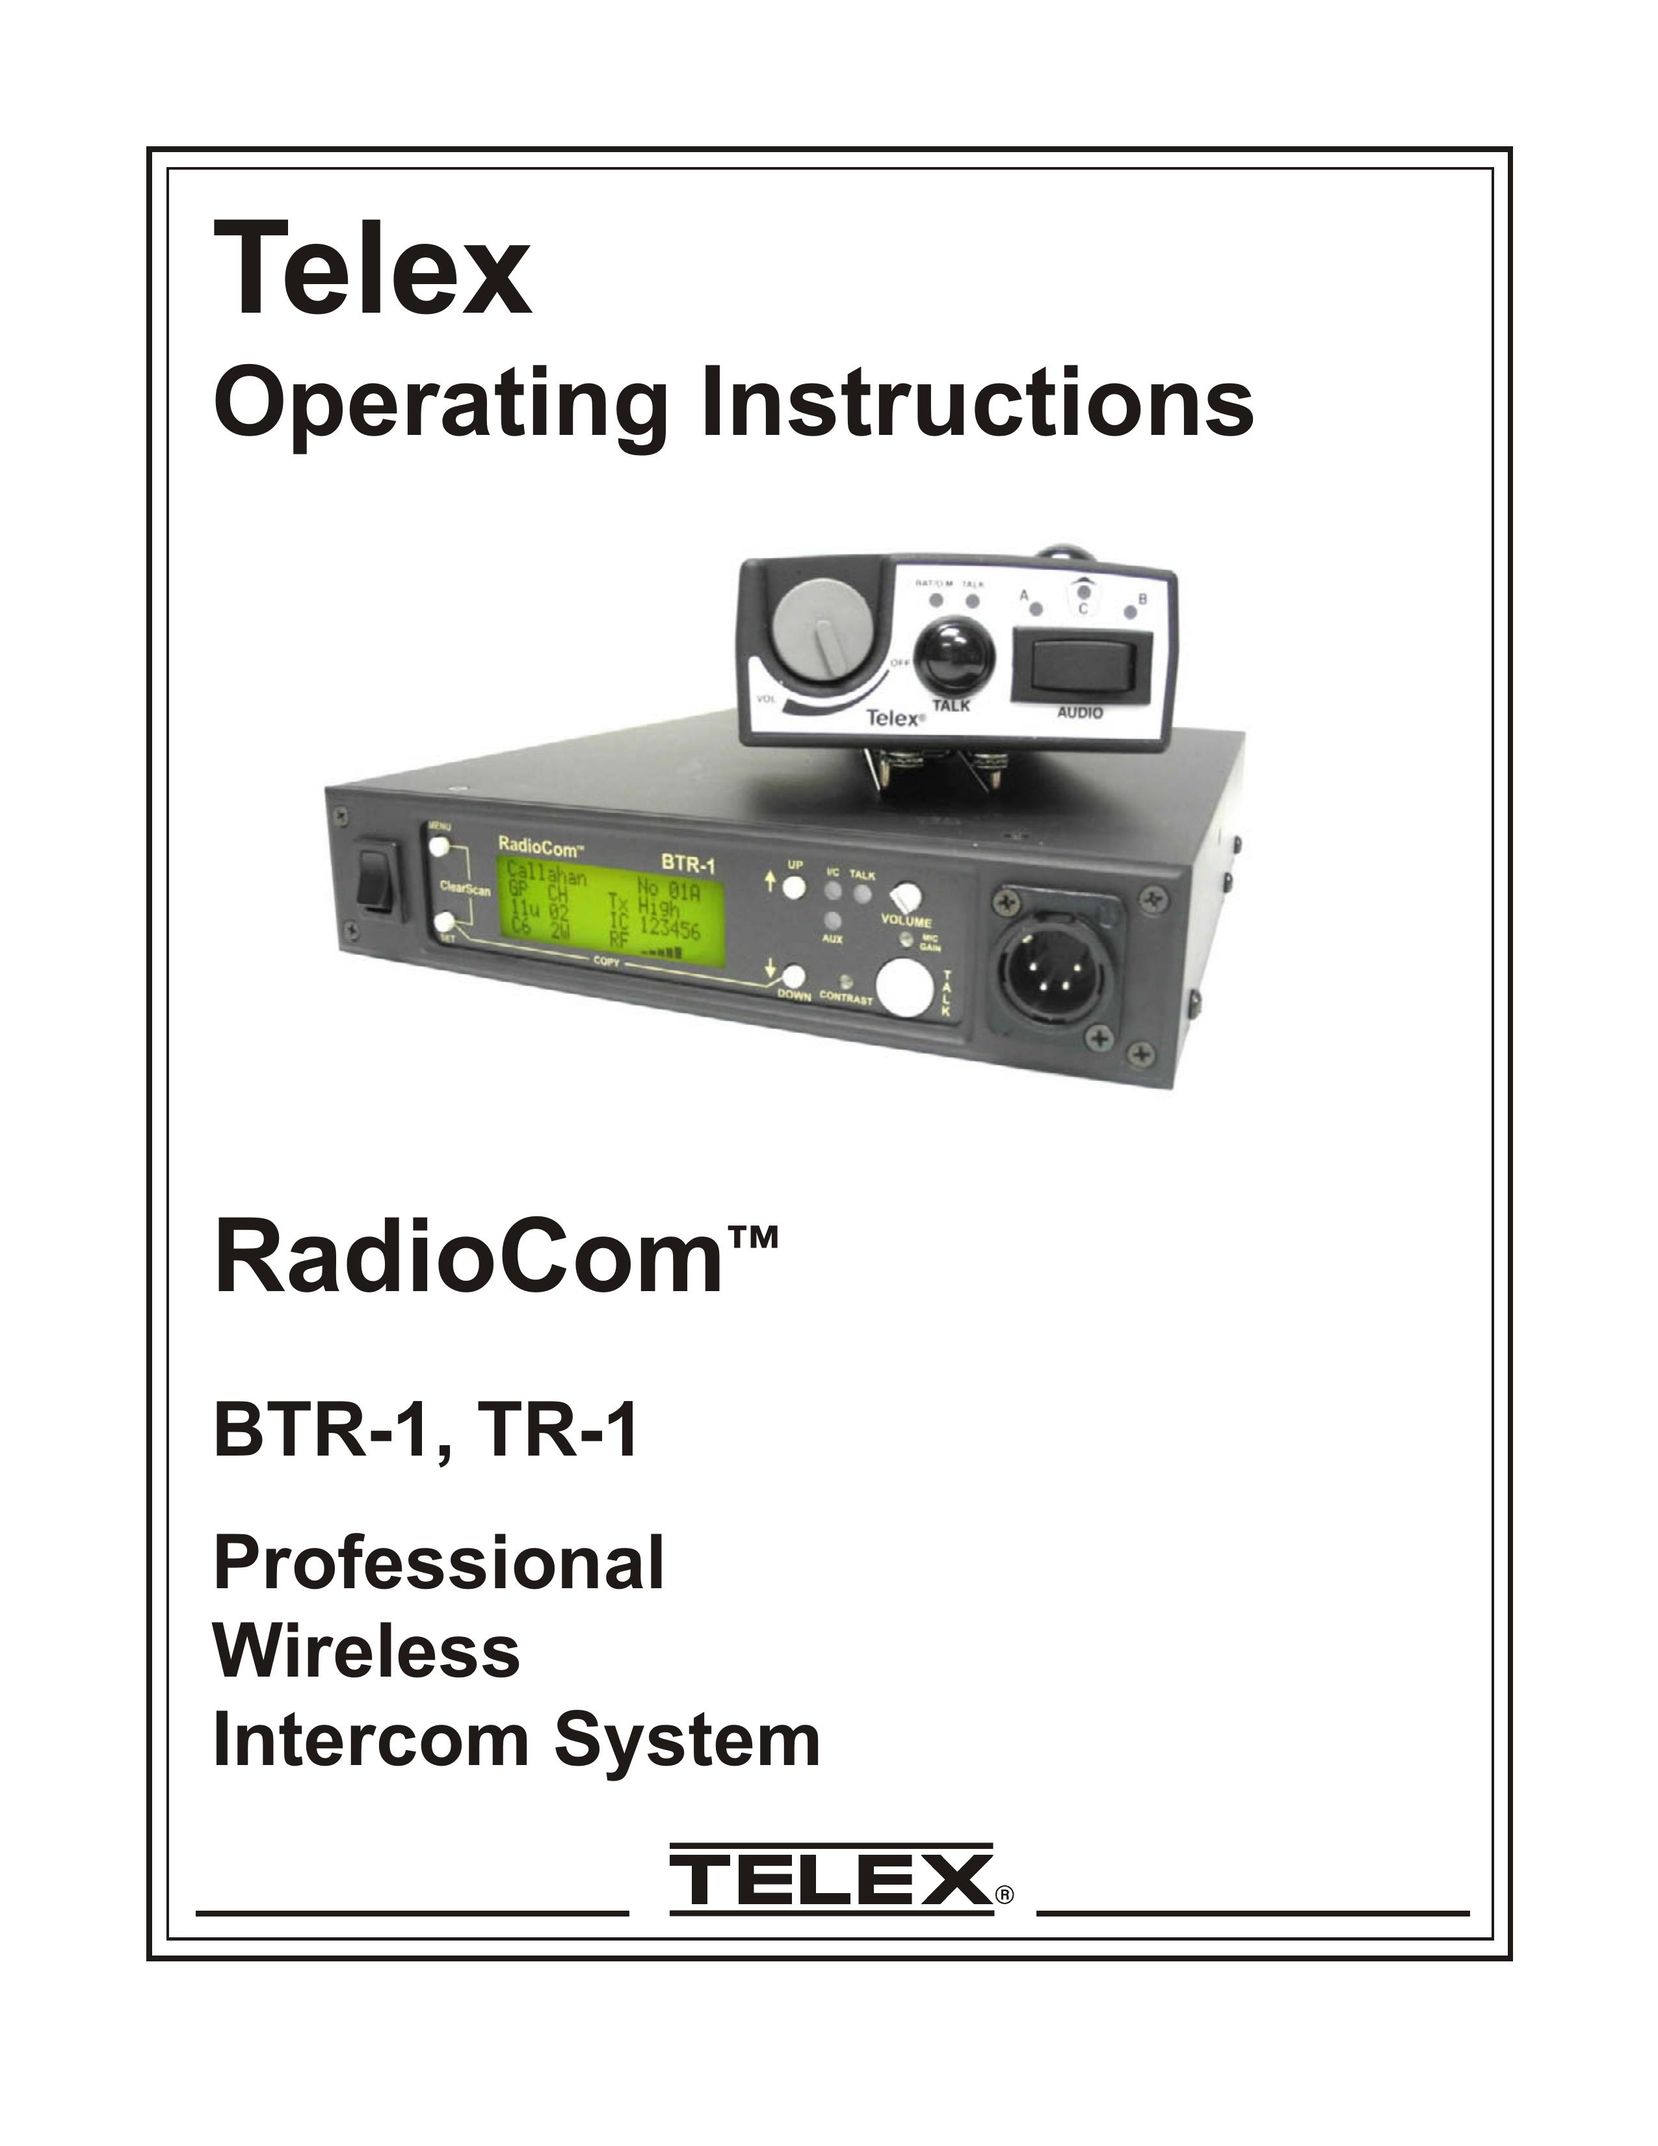 Telex btr-1 Intercom System User Manual